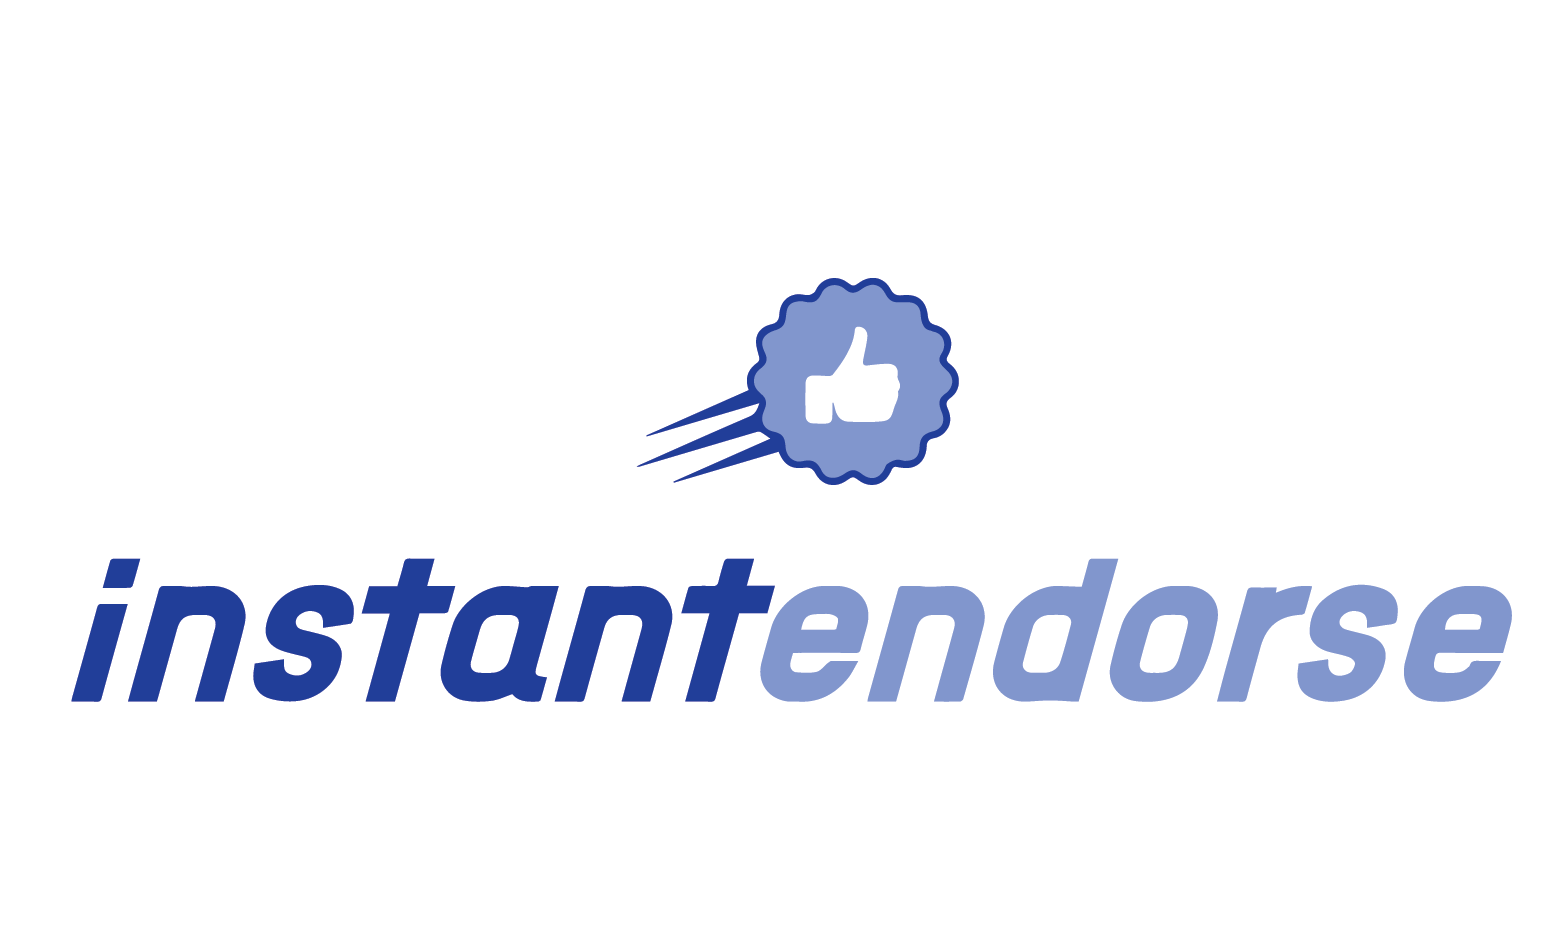 InstantEndorse.com - Creative brandable domain for sale